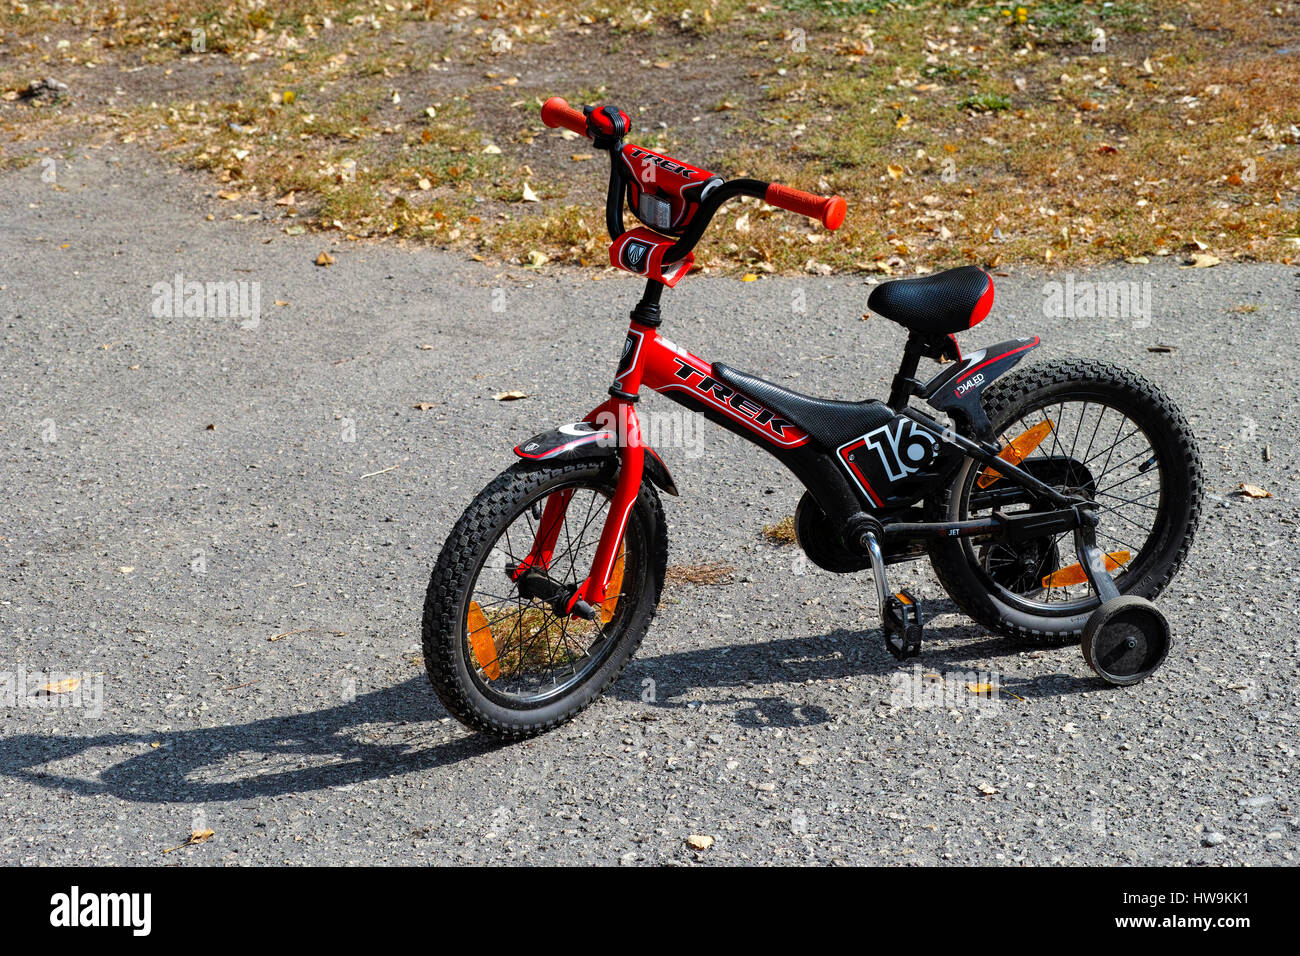 Tambow, Russische Föderation - 27. September 2014 Trek Jet 16 Kinder Fahrrad  mit Stützrädern Stockfotografie - Alamy